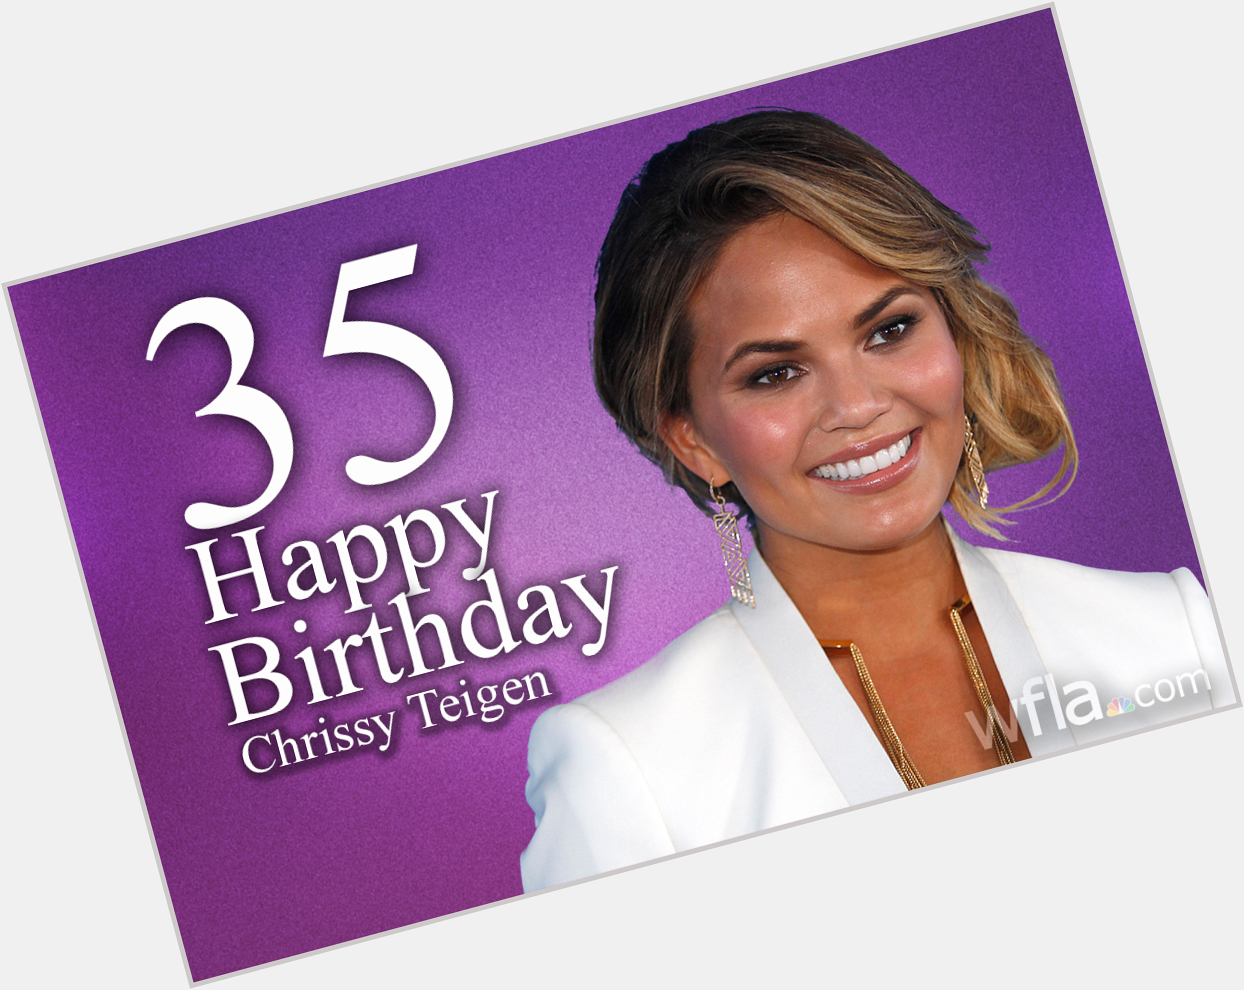 Join us in wishing a very happy birthday to model Chrissy Teigen!  